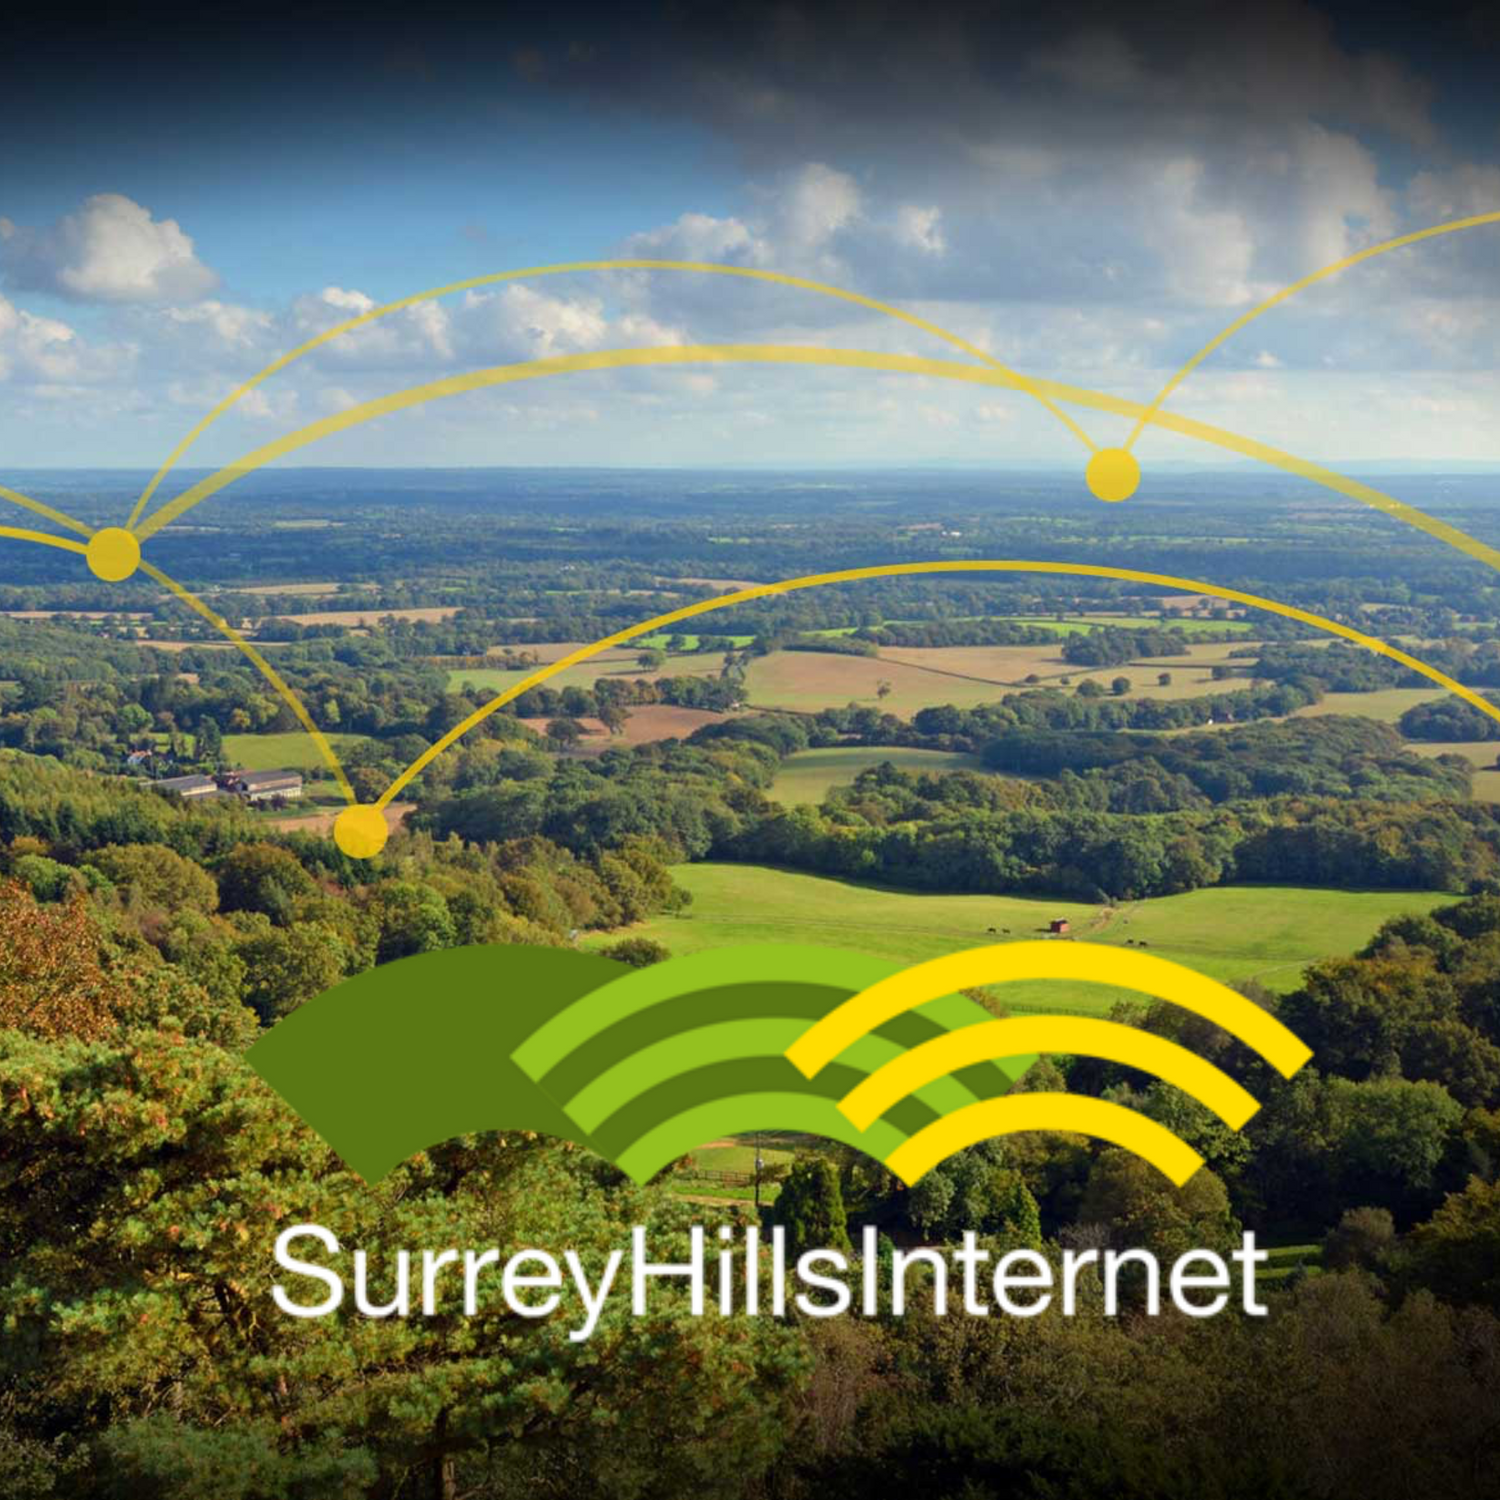 HFLbroadband Acquires Surrey Hills Internet